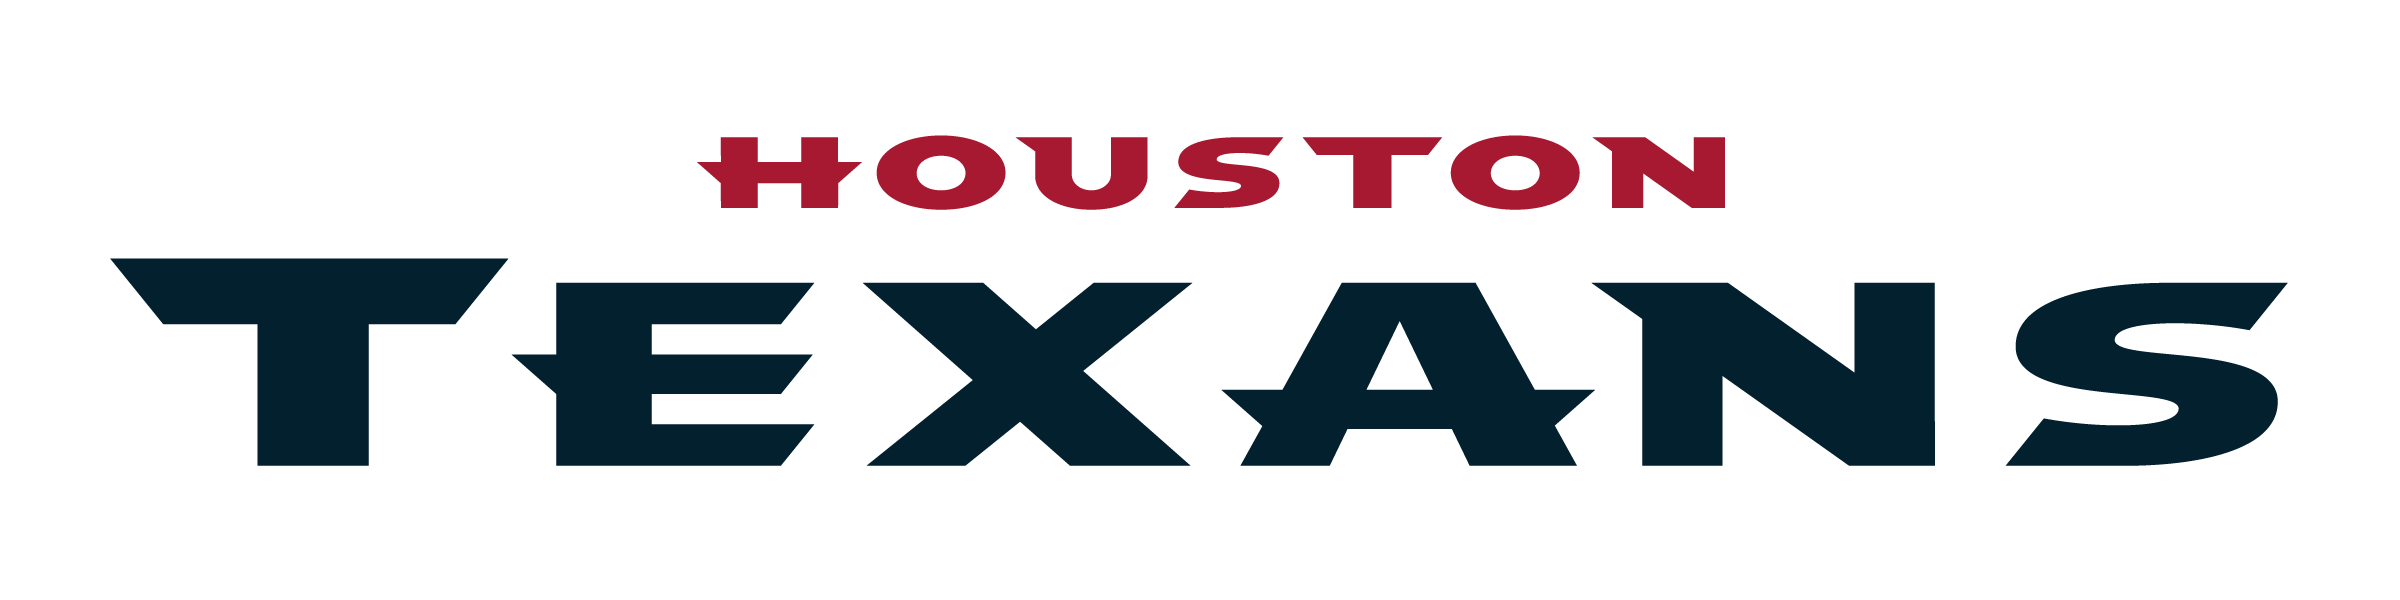 Texasn Logo - Houston Texans Logo PNG Transparent & SVG Vector - Freebie Supply